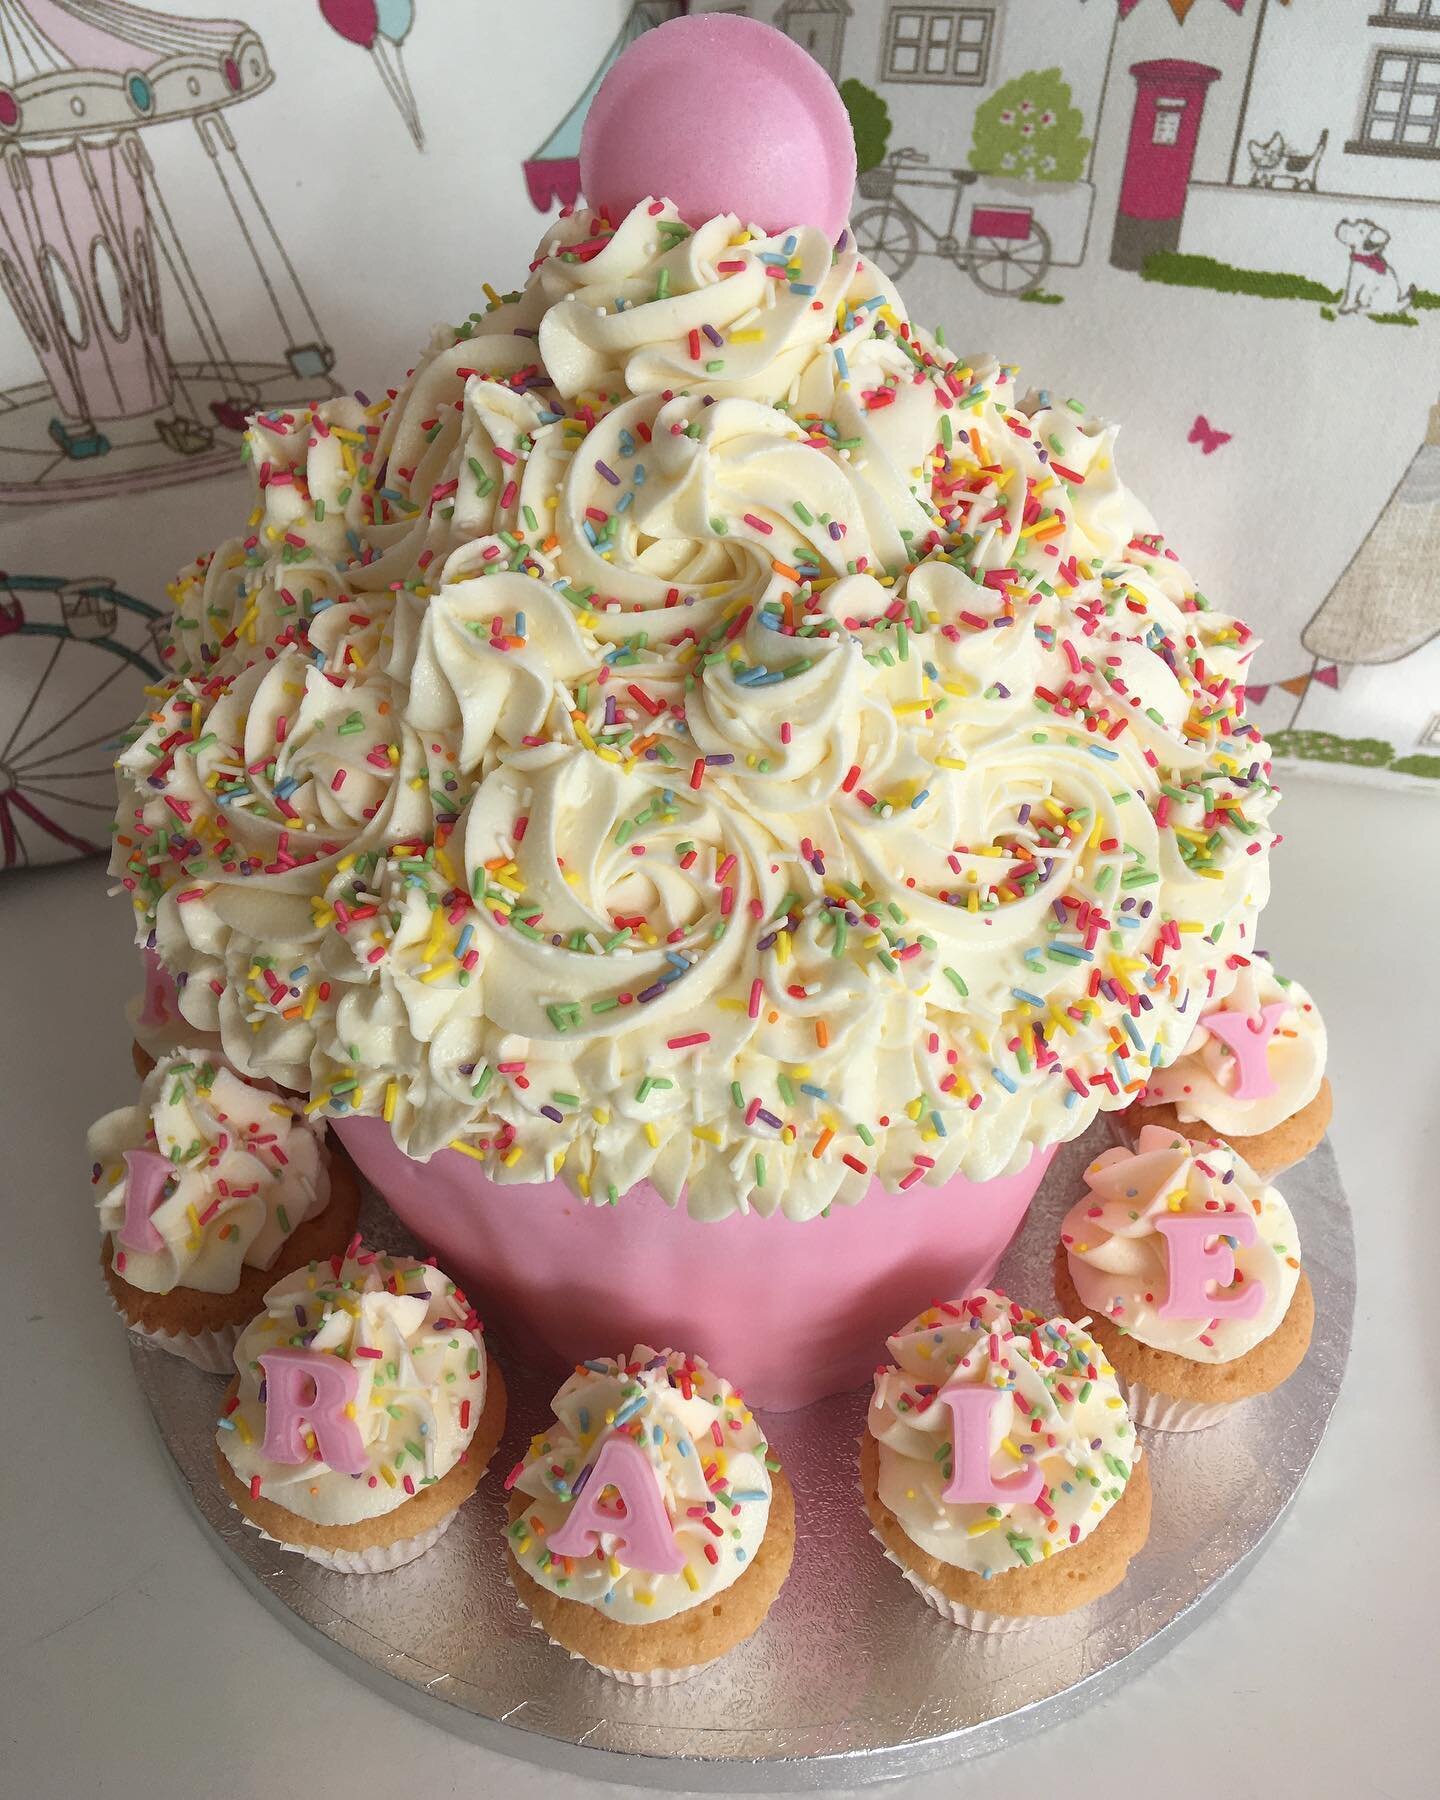 Simple sprinkles make my life. 

#teacupsandcupcakescardiff #giantcupcake #sprinkles #colouful #happybirthday #teaandcake